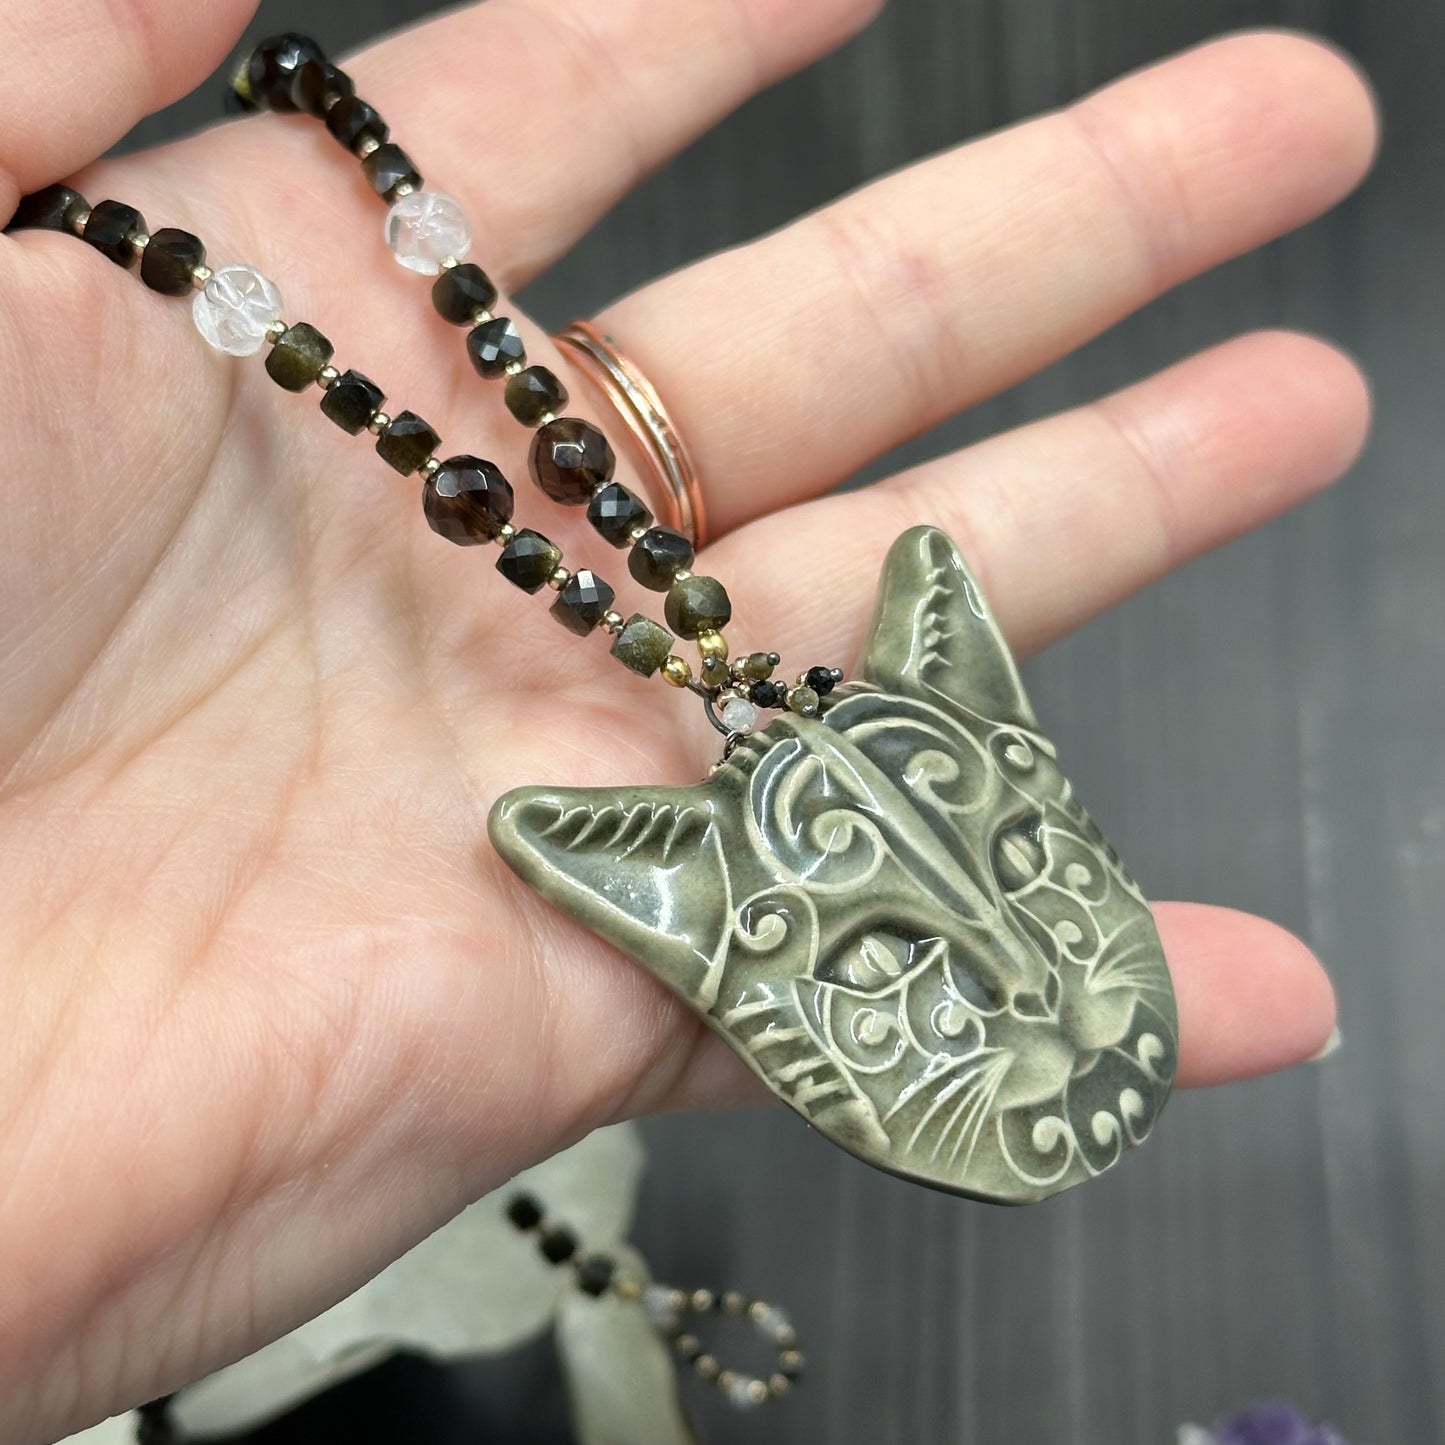 Ceramic Cat Necklace with Golden Obsidian, Smoky Quartz, Quartz, and Praisolite